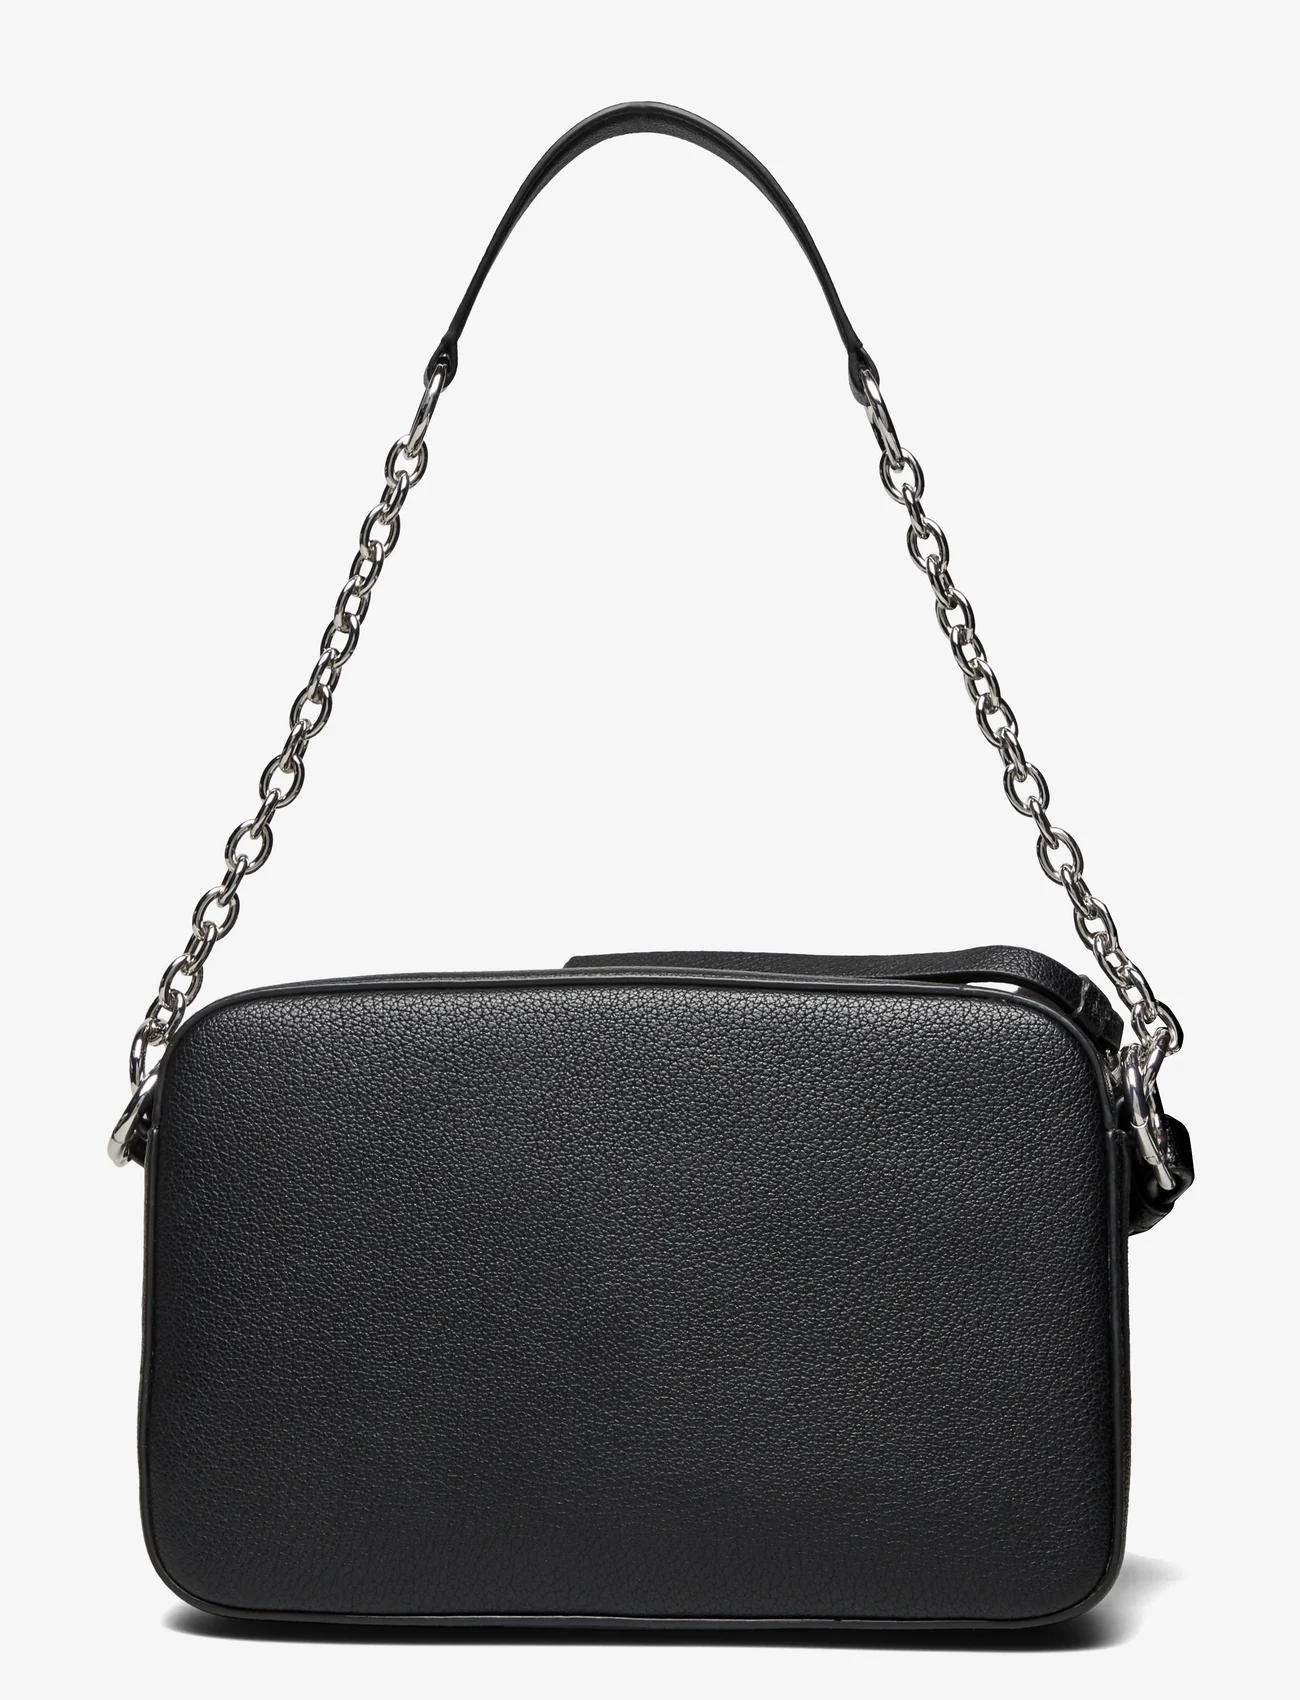 DKNY Bags - GREENPOINT CAMERA BAG - feestelijke kleding voor outlet-prijzen - bsv - black/silver - 1